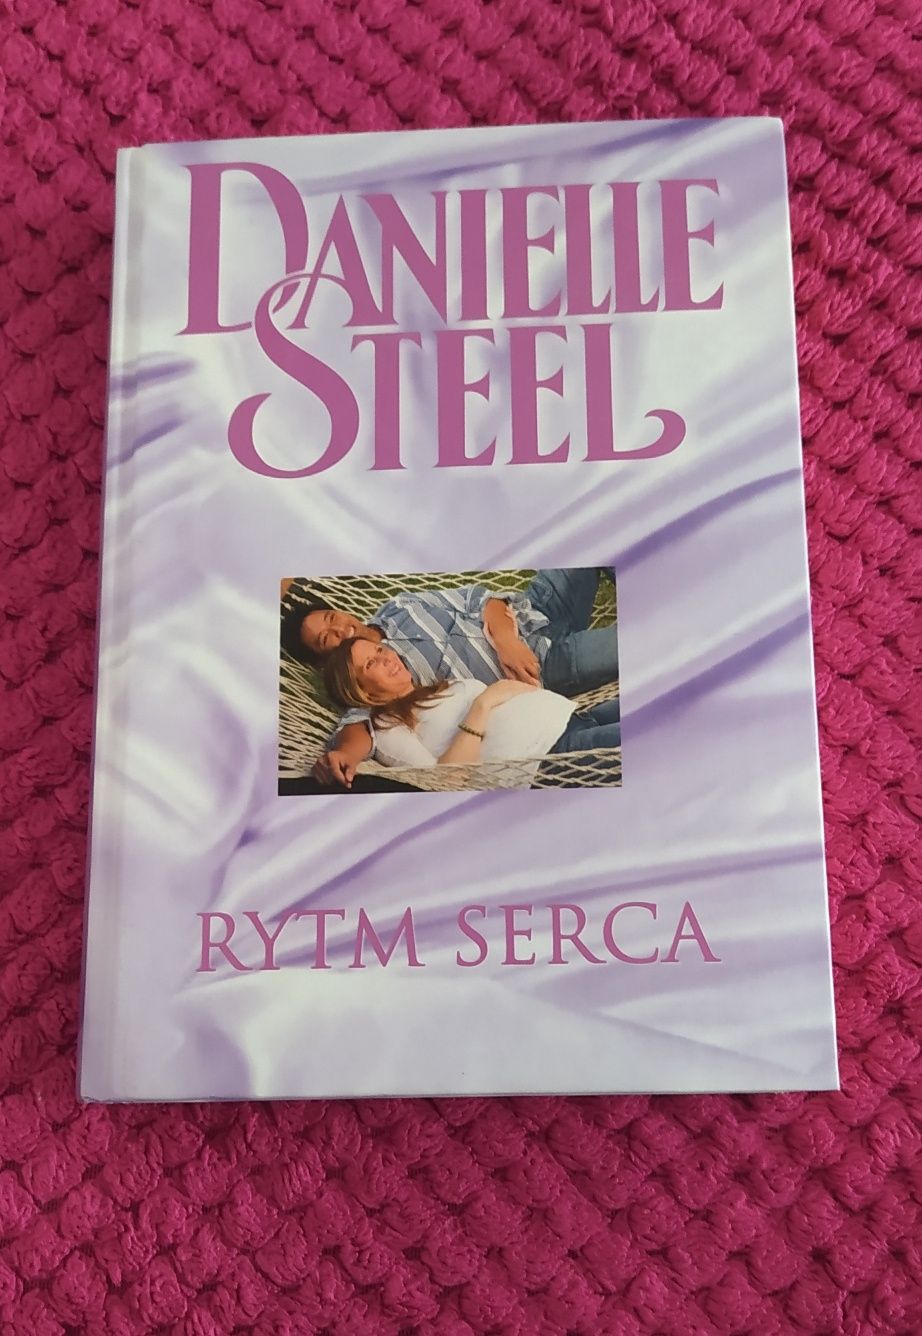 Książka Danielle Steel "Rytm serca"